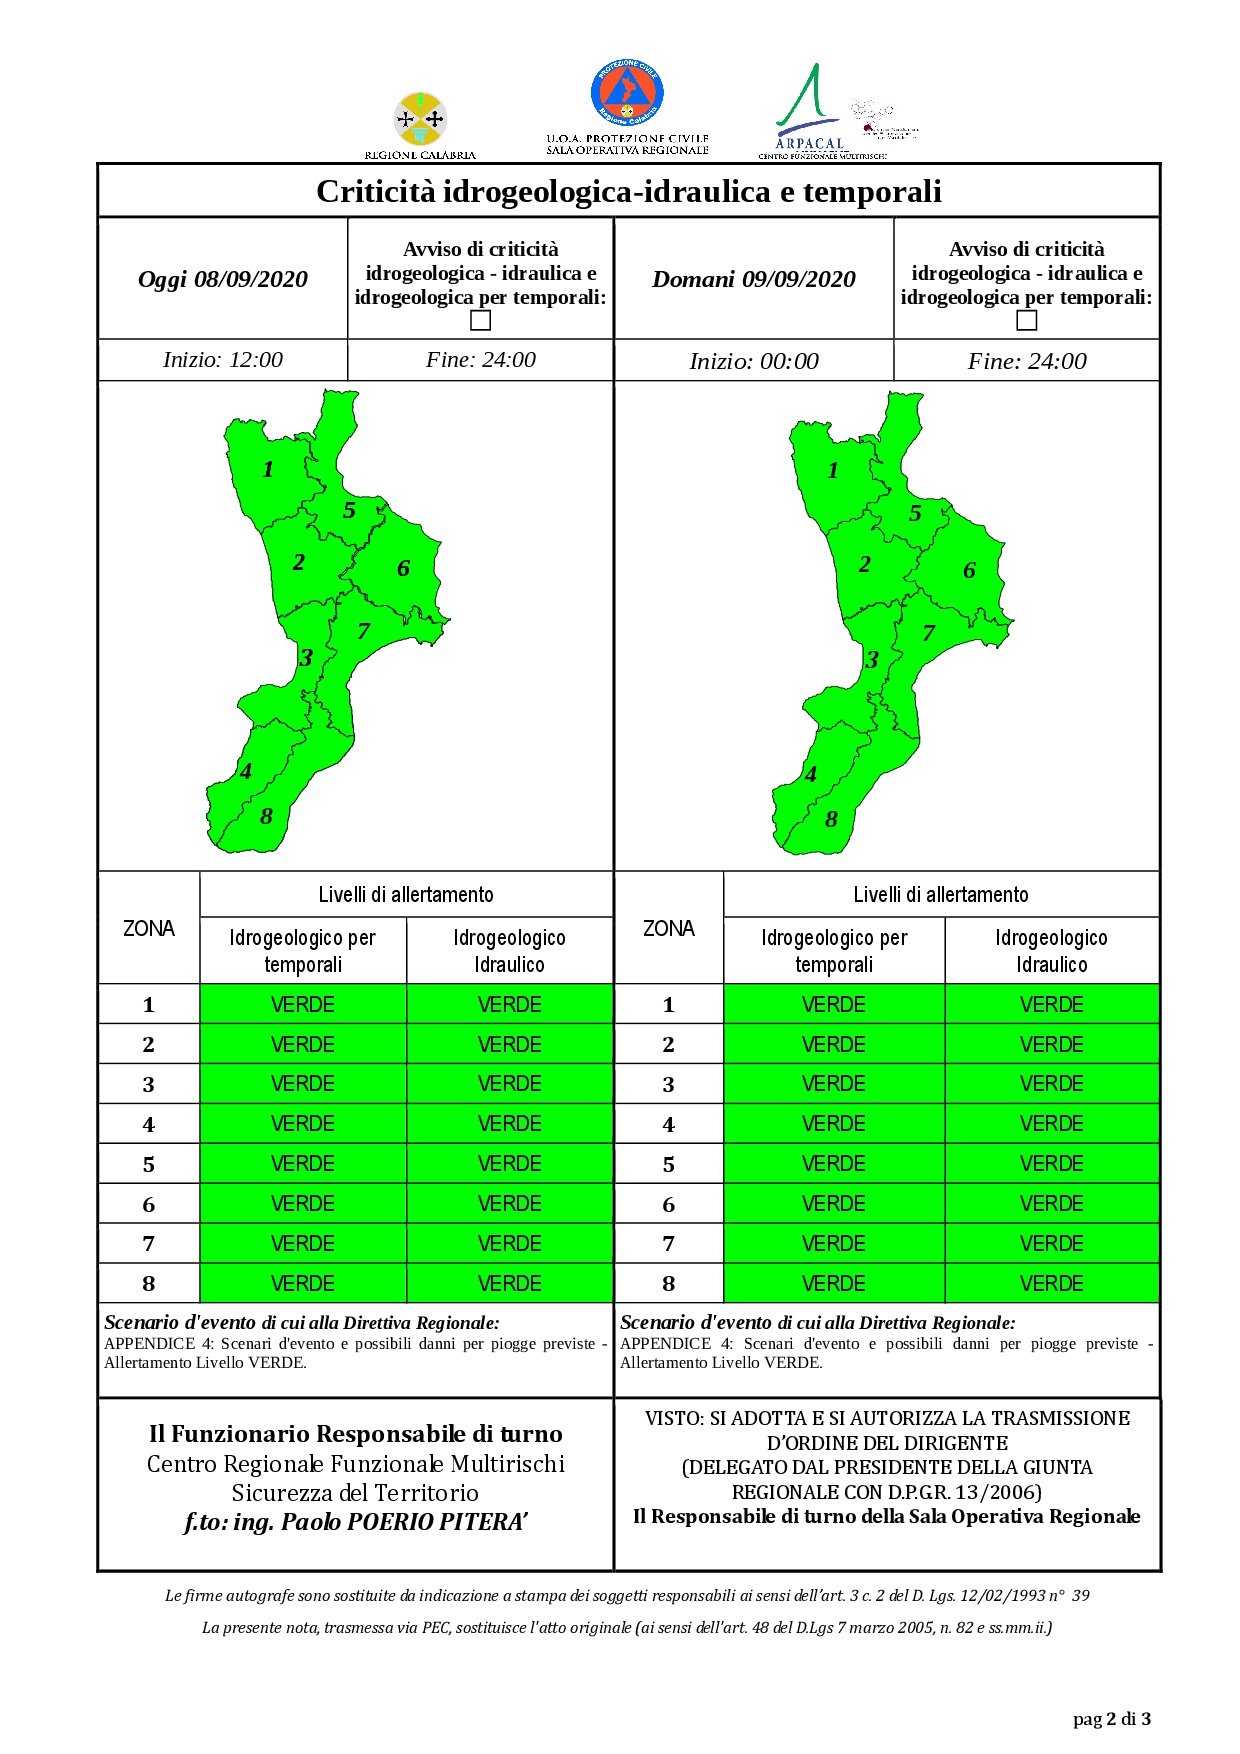 Criticità idrogeologica-idraulica e temporali in Calabria 08-09-2020